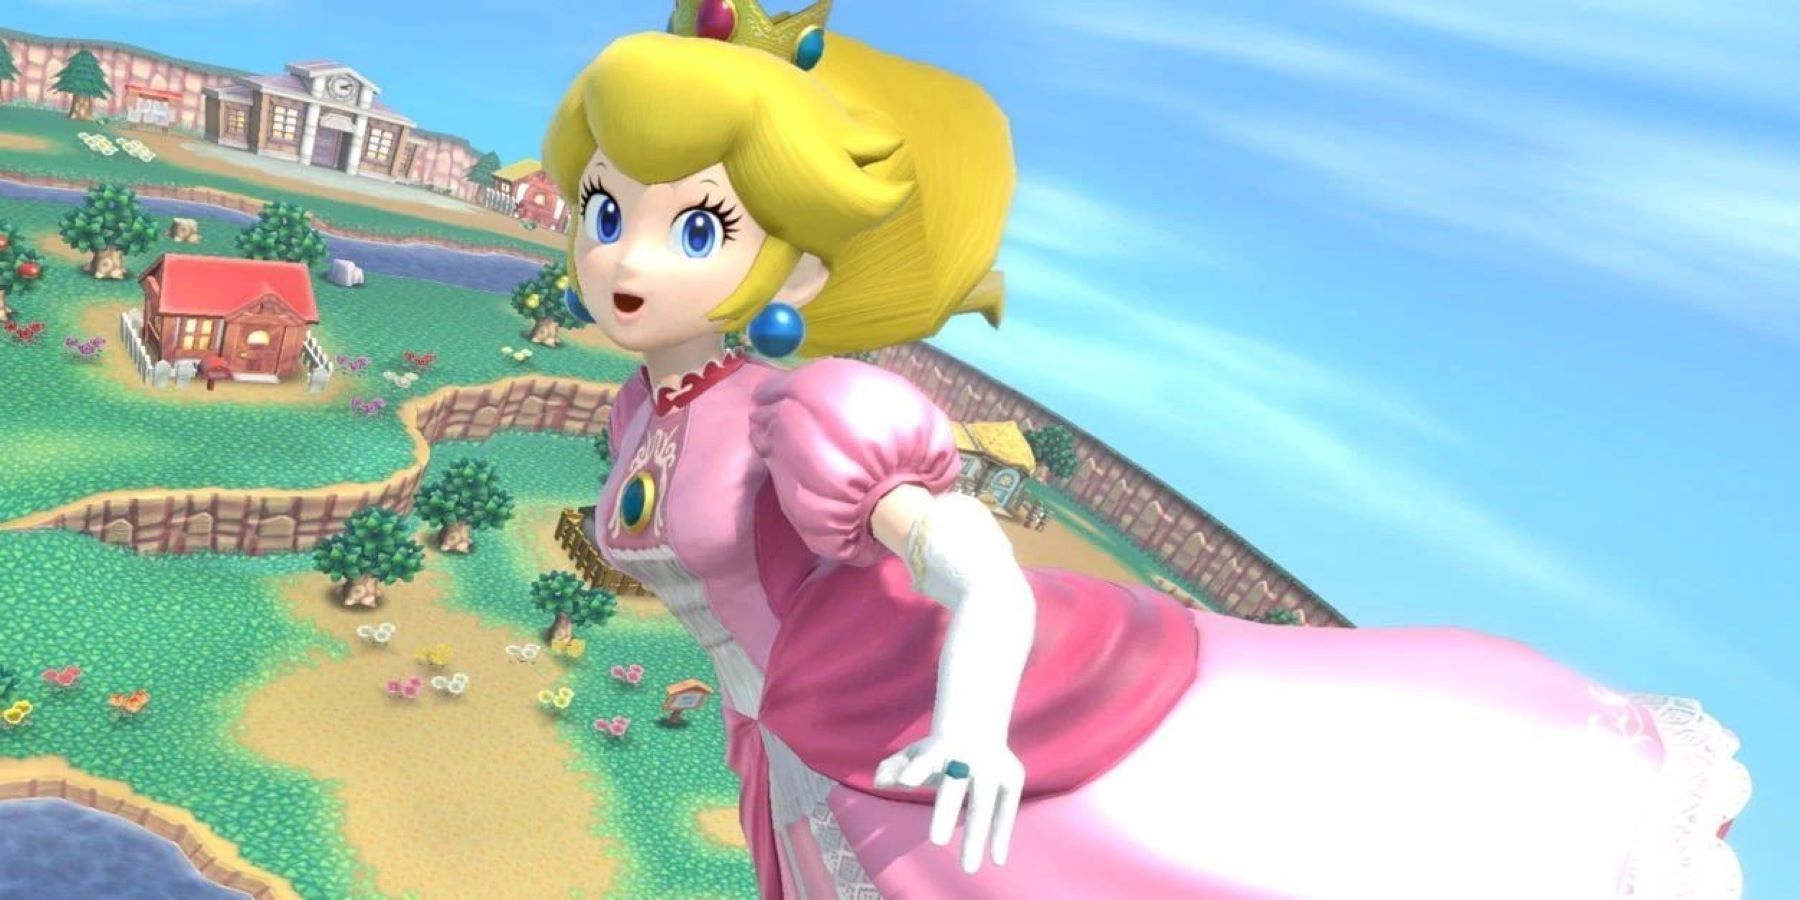 Princess Peach smiling at the camera in Super Smash Bros. Ultimate